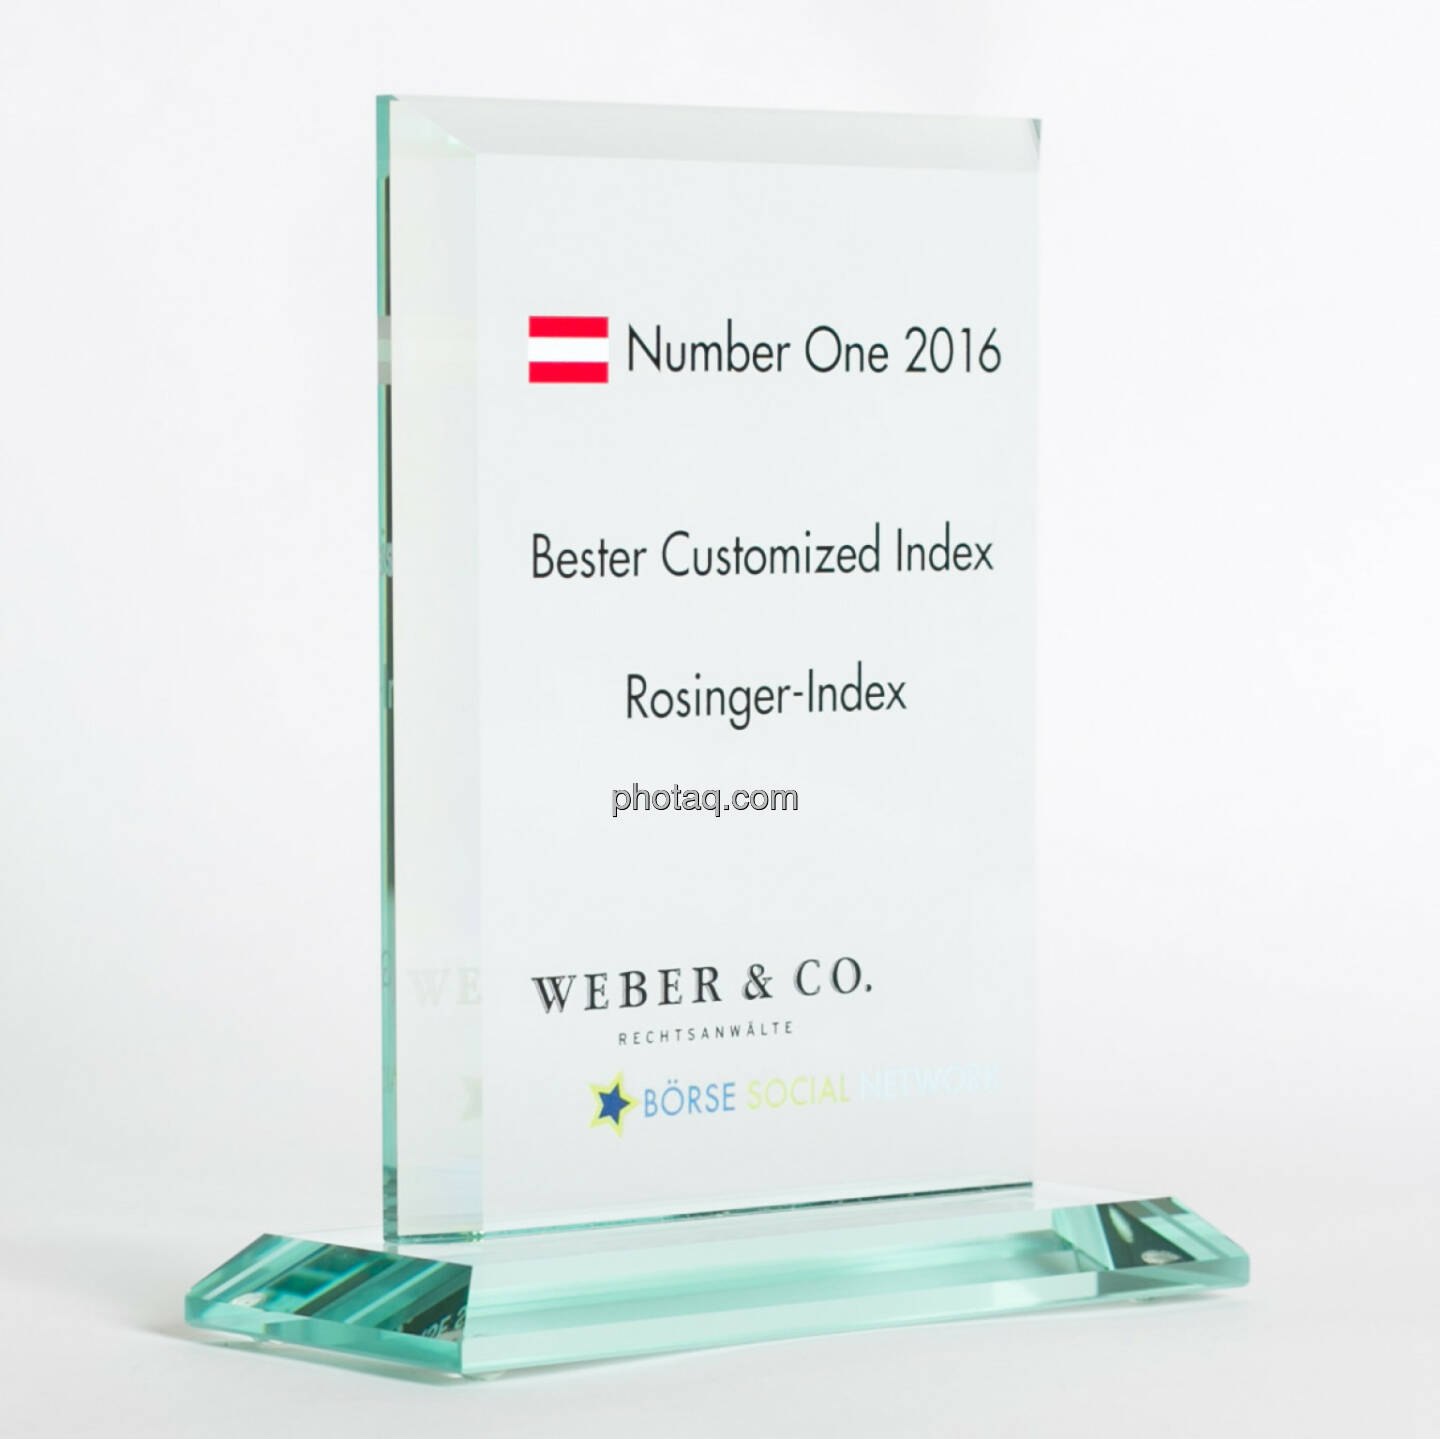 Number One Awards 2016 - Bester Customized Index Rosinger-Index